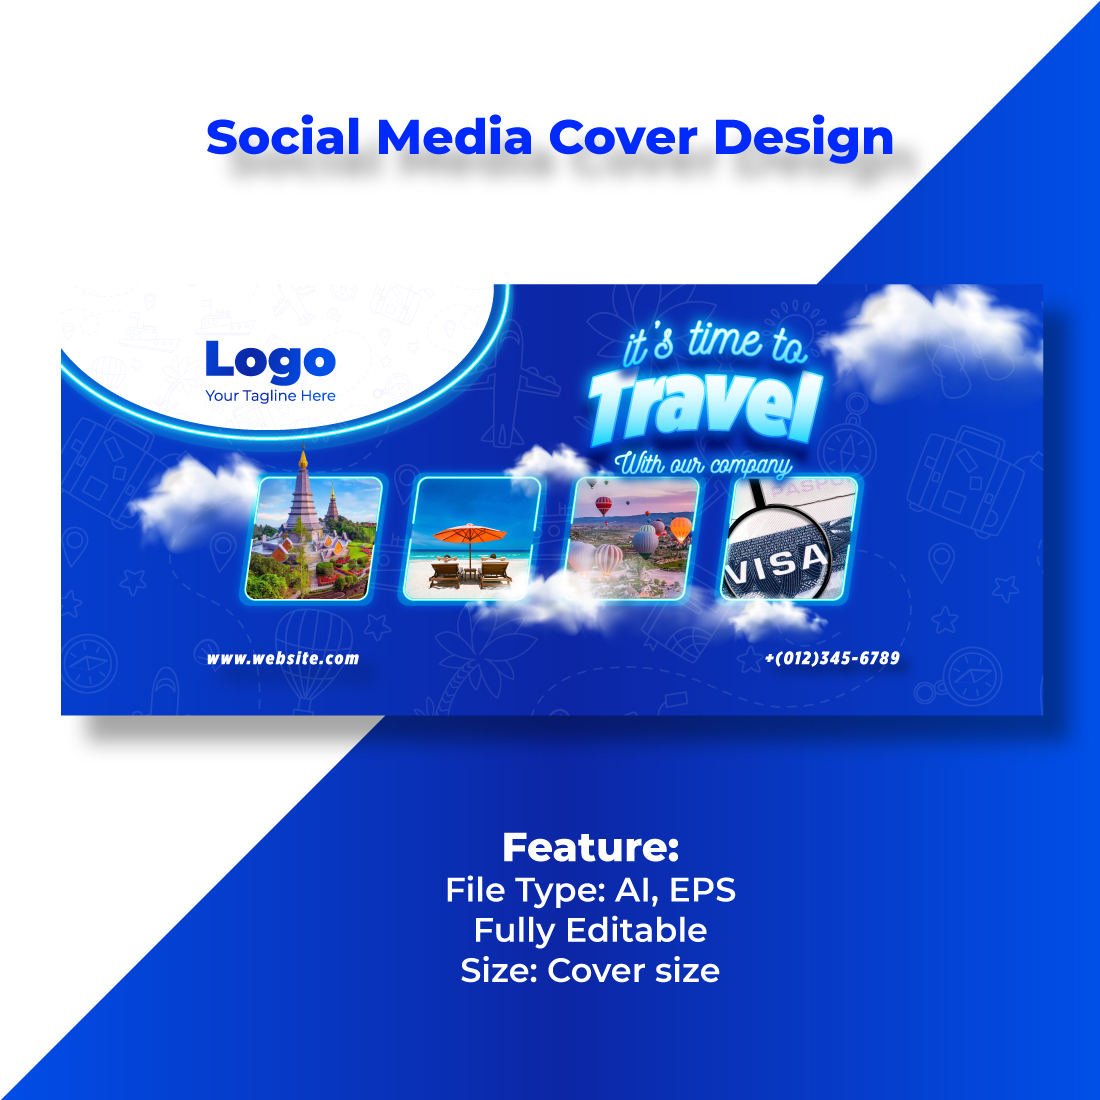 Social media cover design preview image.